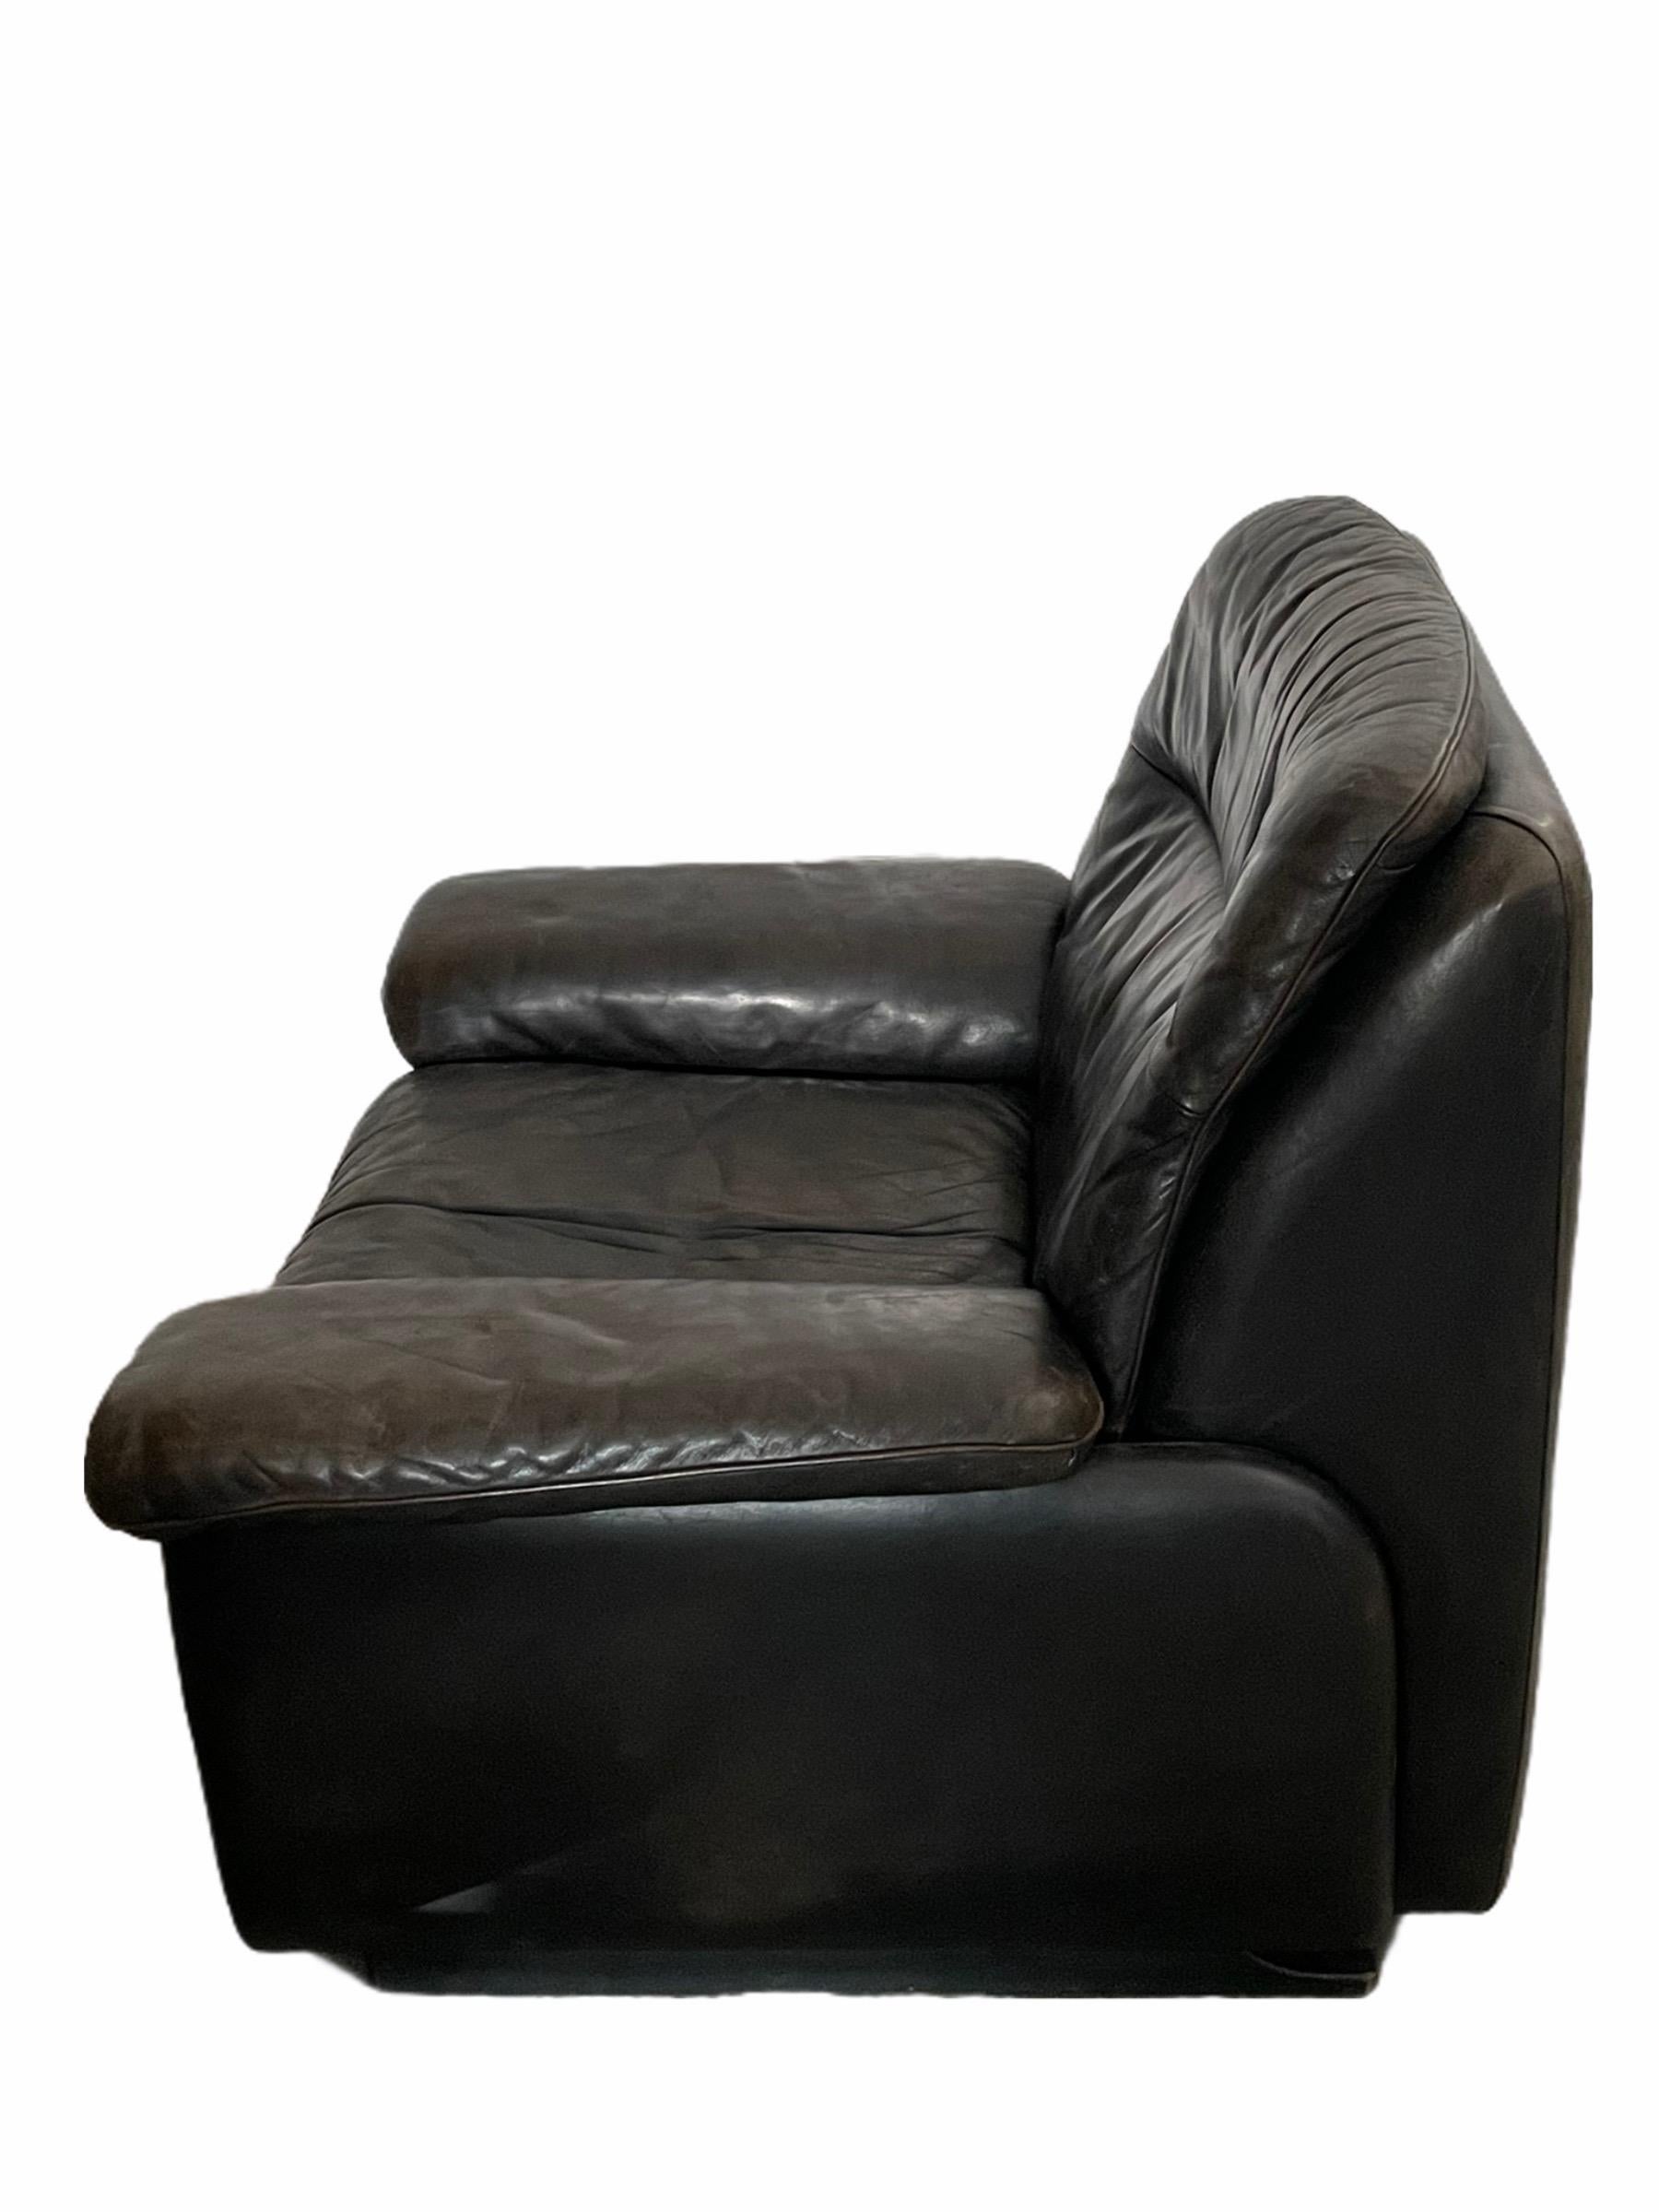 20th Century De Sede, 1970s Vintage Leather Reclining Armchair, Black